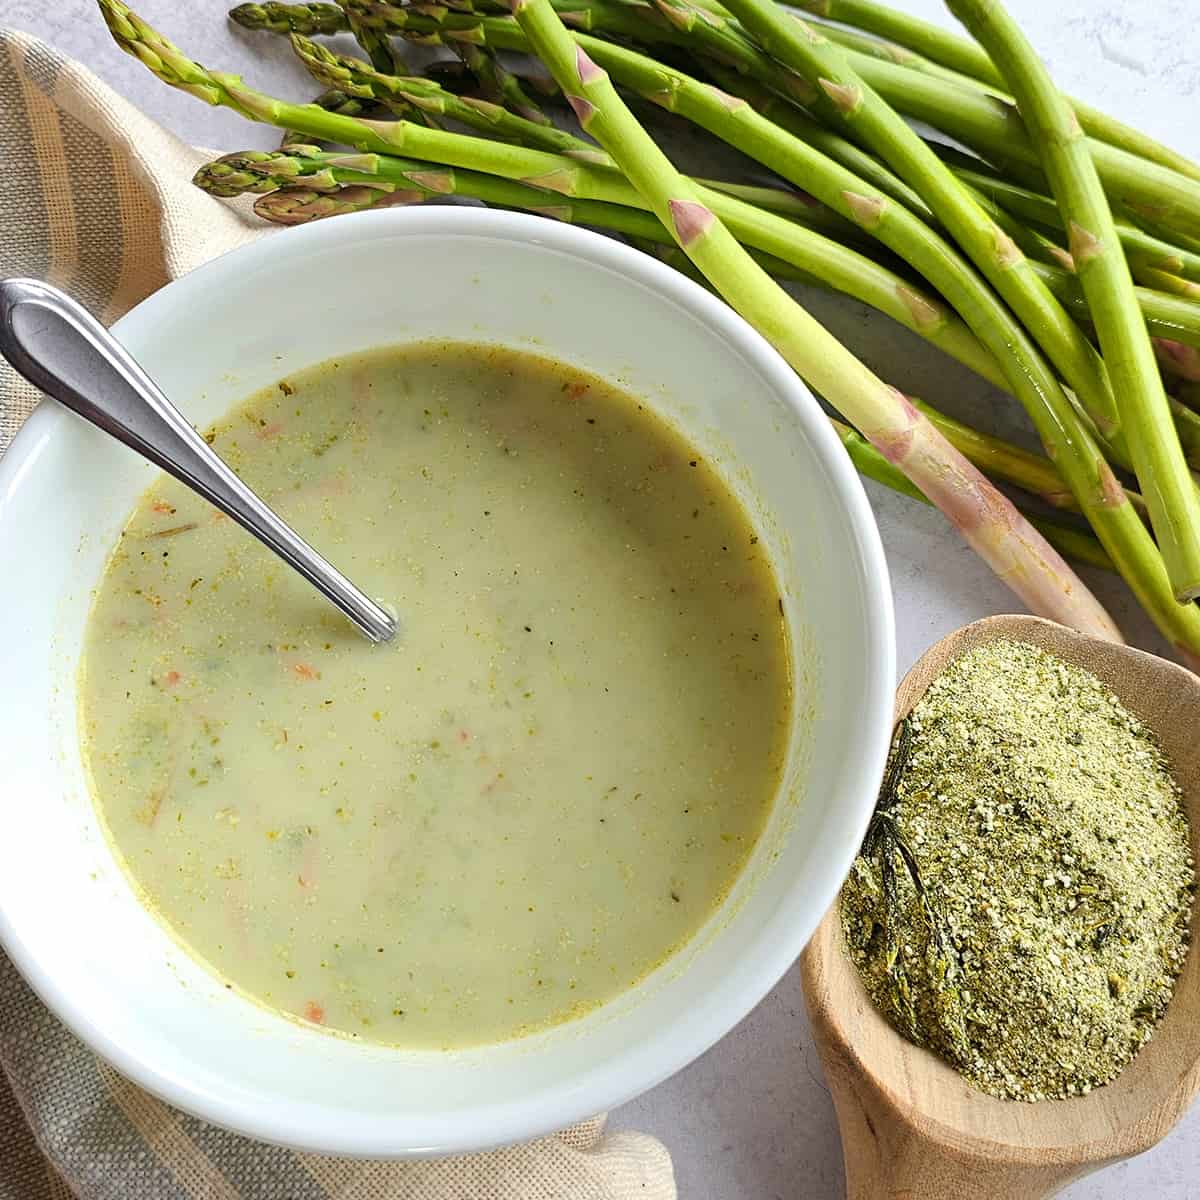 A bowl of creamy asparagus soup next to fresh asparagus stalks and a scoop of asparagus soup powder.